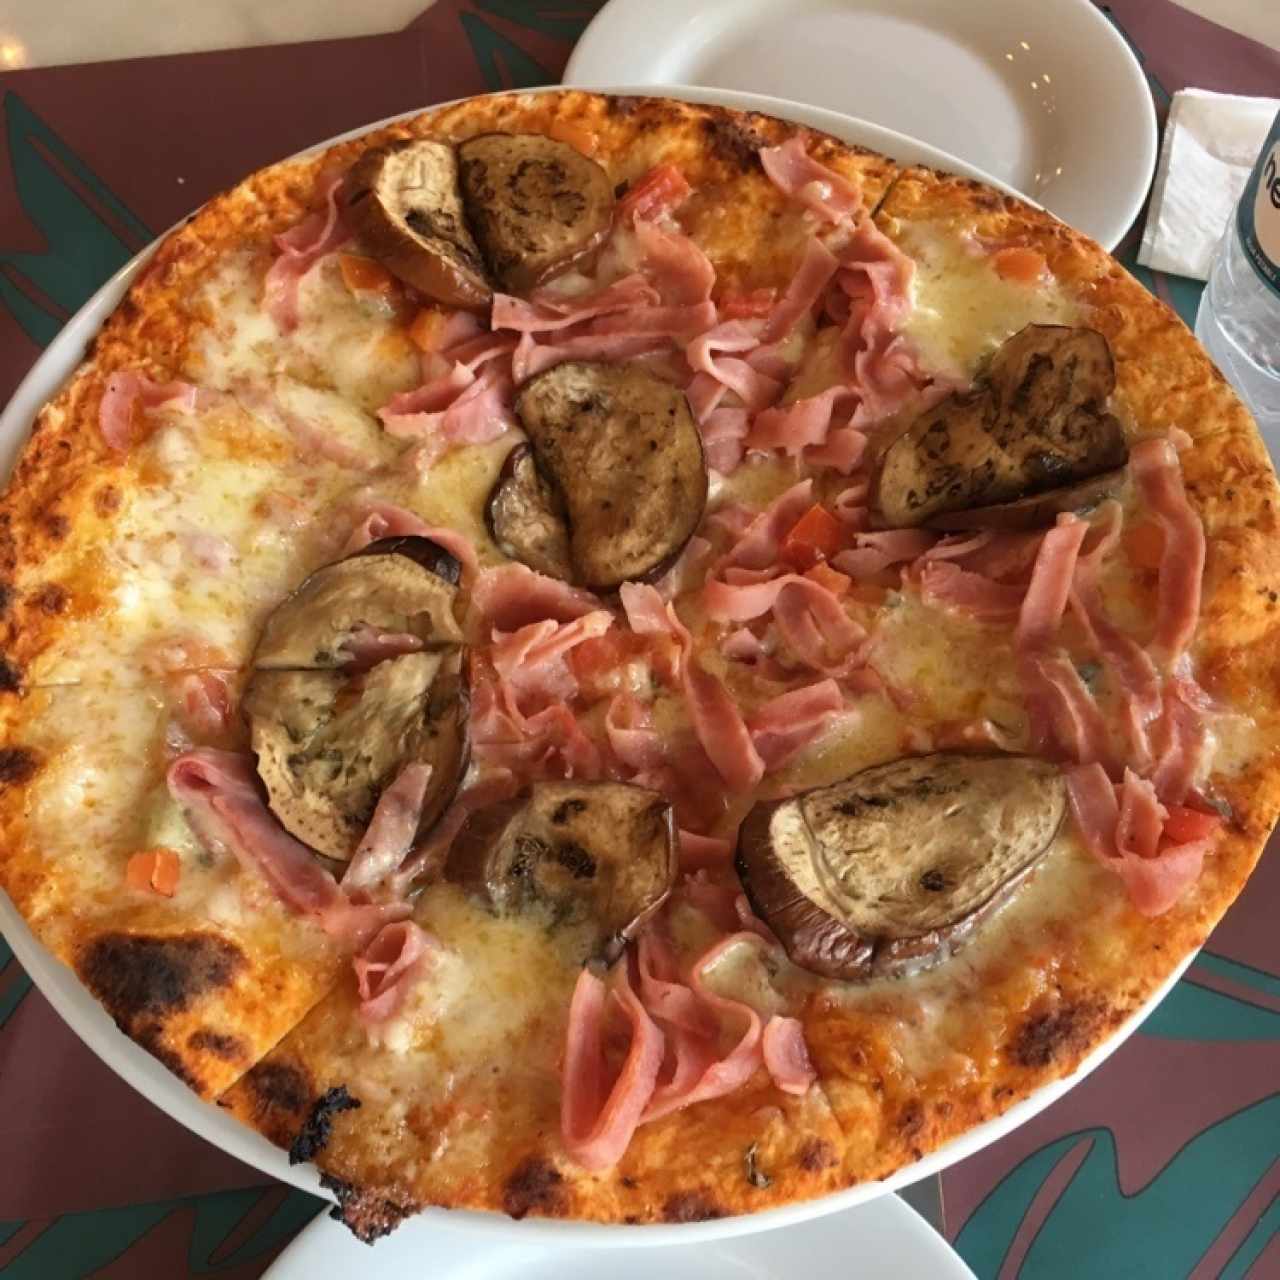 pizza de Peperoneta, Tomate y Berengena al Grill